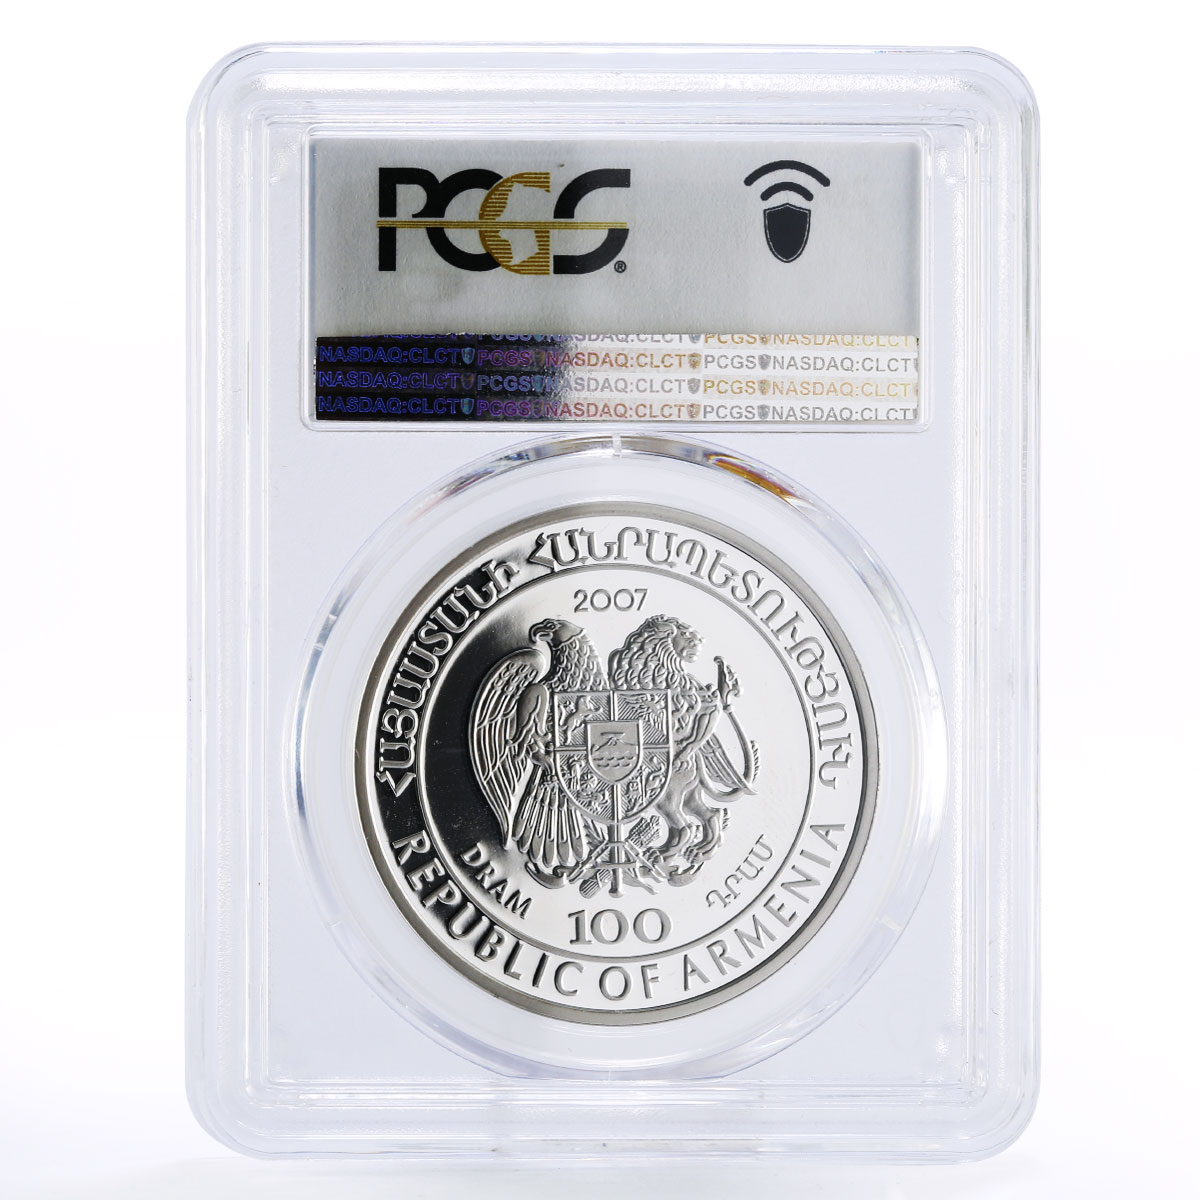 Armenia 100 dram Red Book of Armenia Snow Leopard PR69 PCGS silver coin 2007